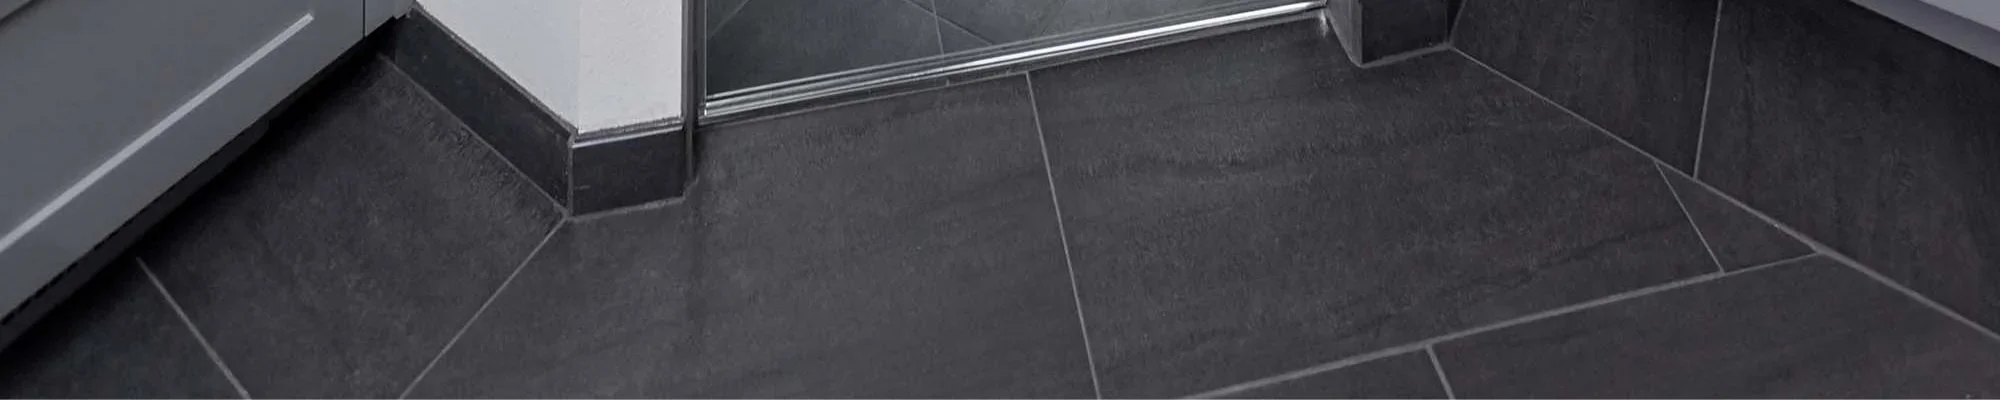 Tile flooring in a bathroom | Altimate Flooring | Rapid City, SD